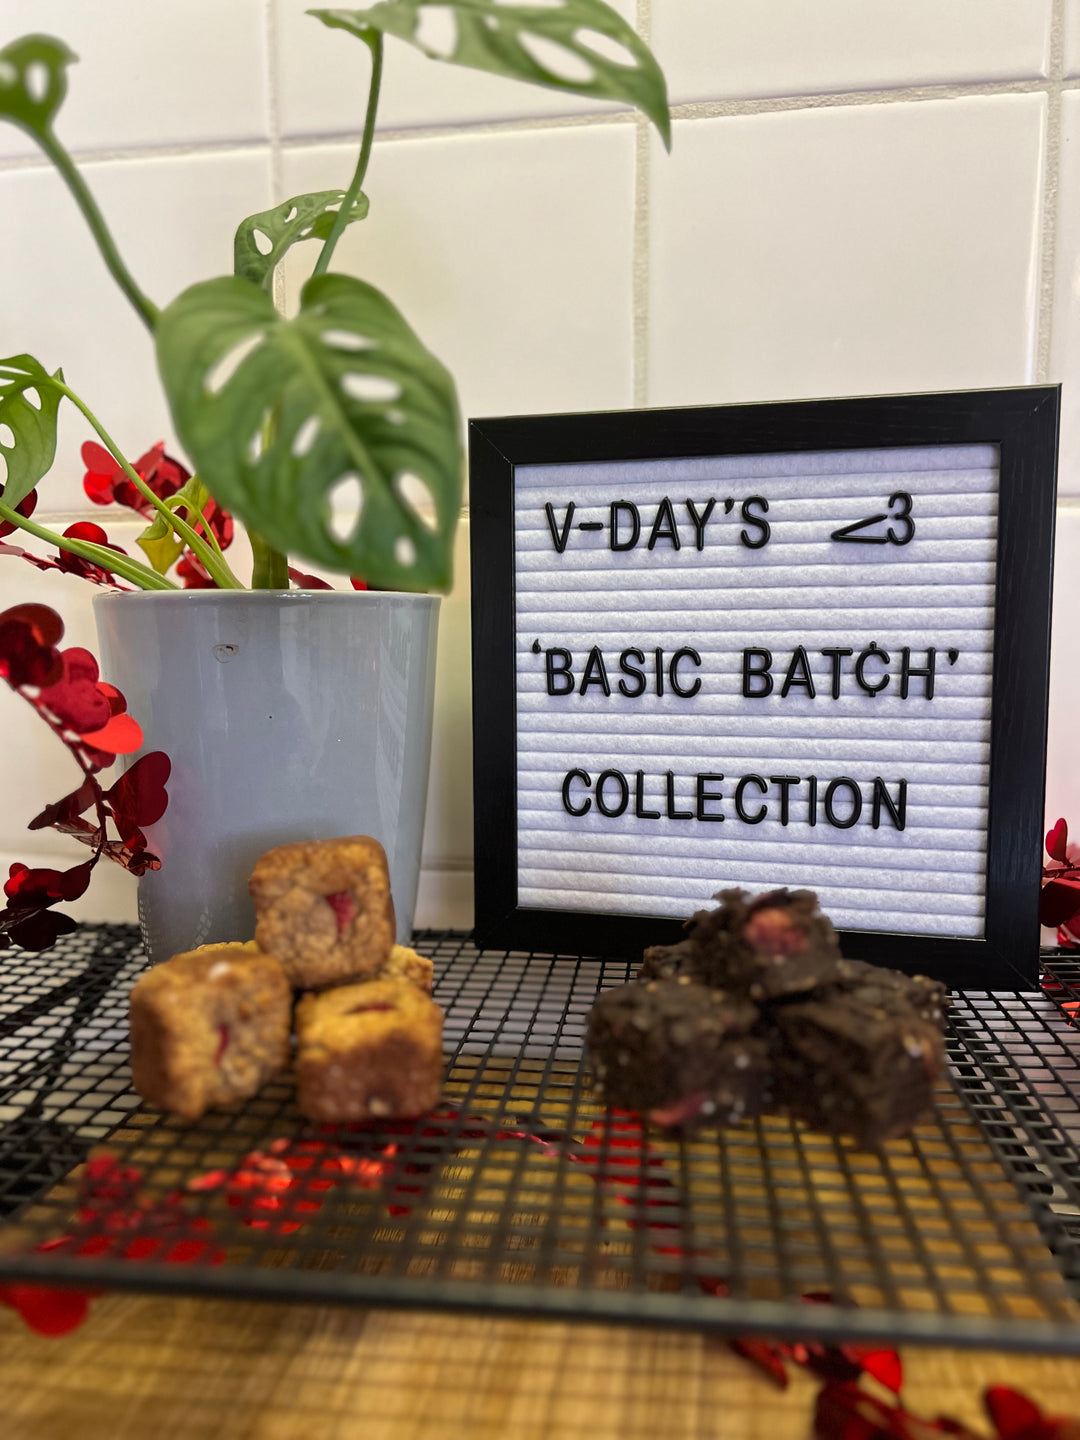 Basic Batch Collection